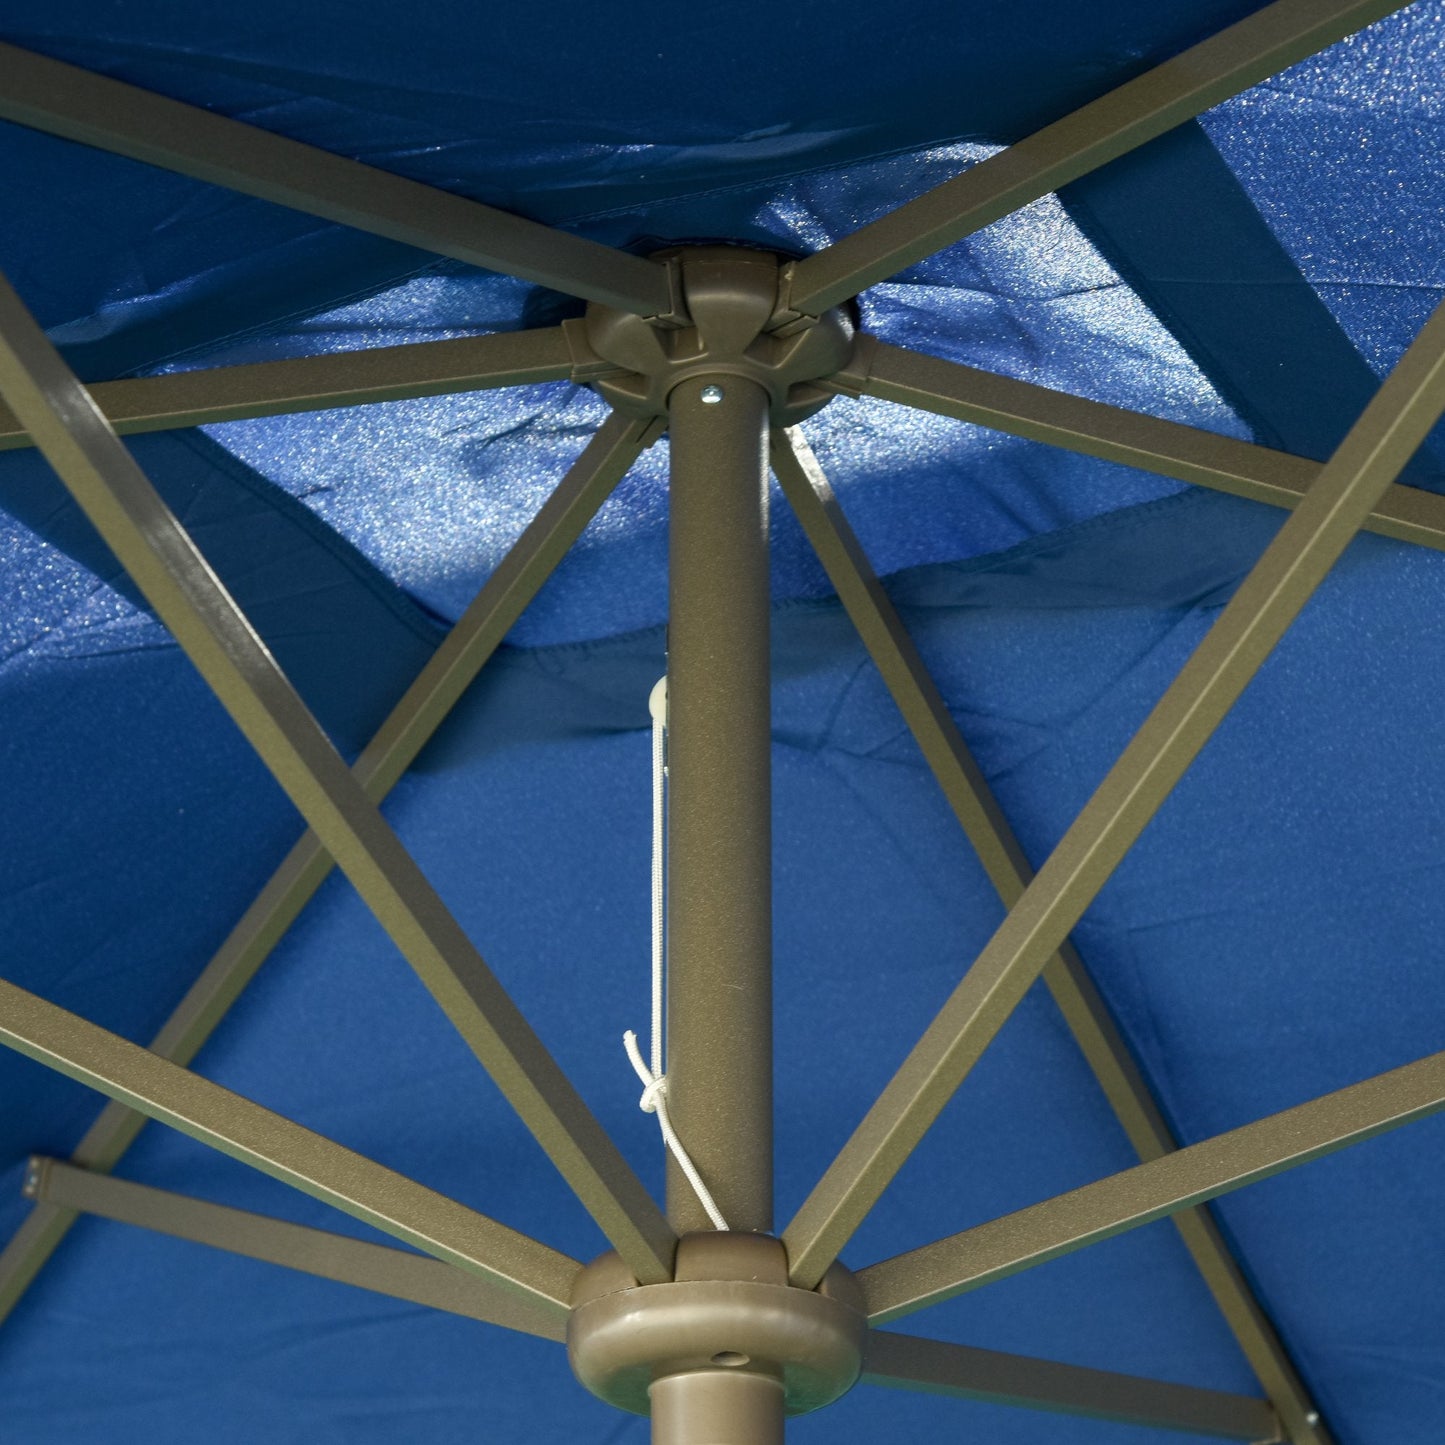 6.5x10ft Patio Umbrella Rectangle Solar Powered Tilt Aluminum Outdoor Market Parasol with LEDs Crank (Dark Blue) at Gallery Canada